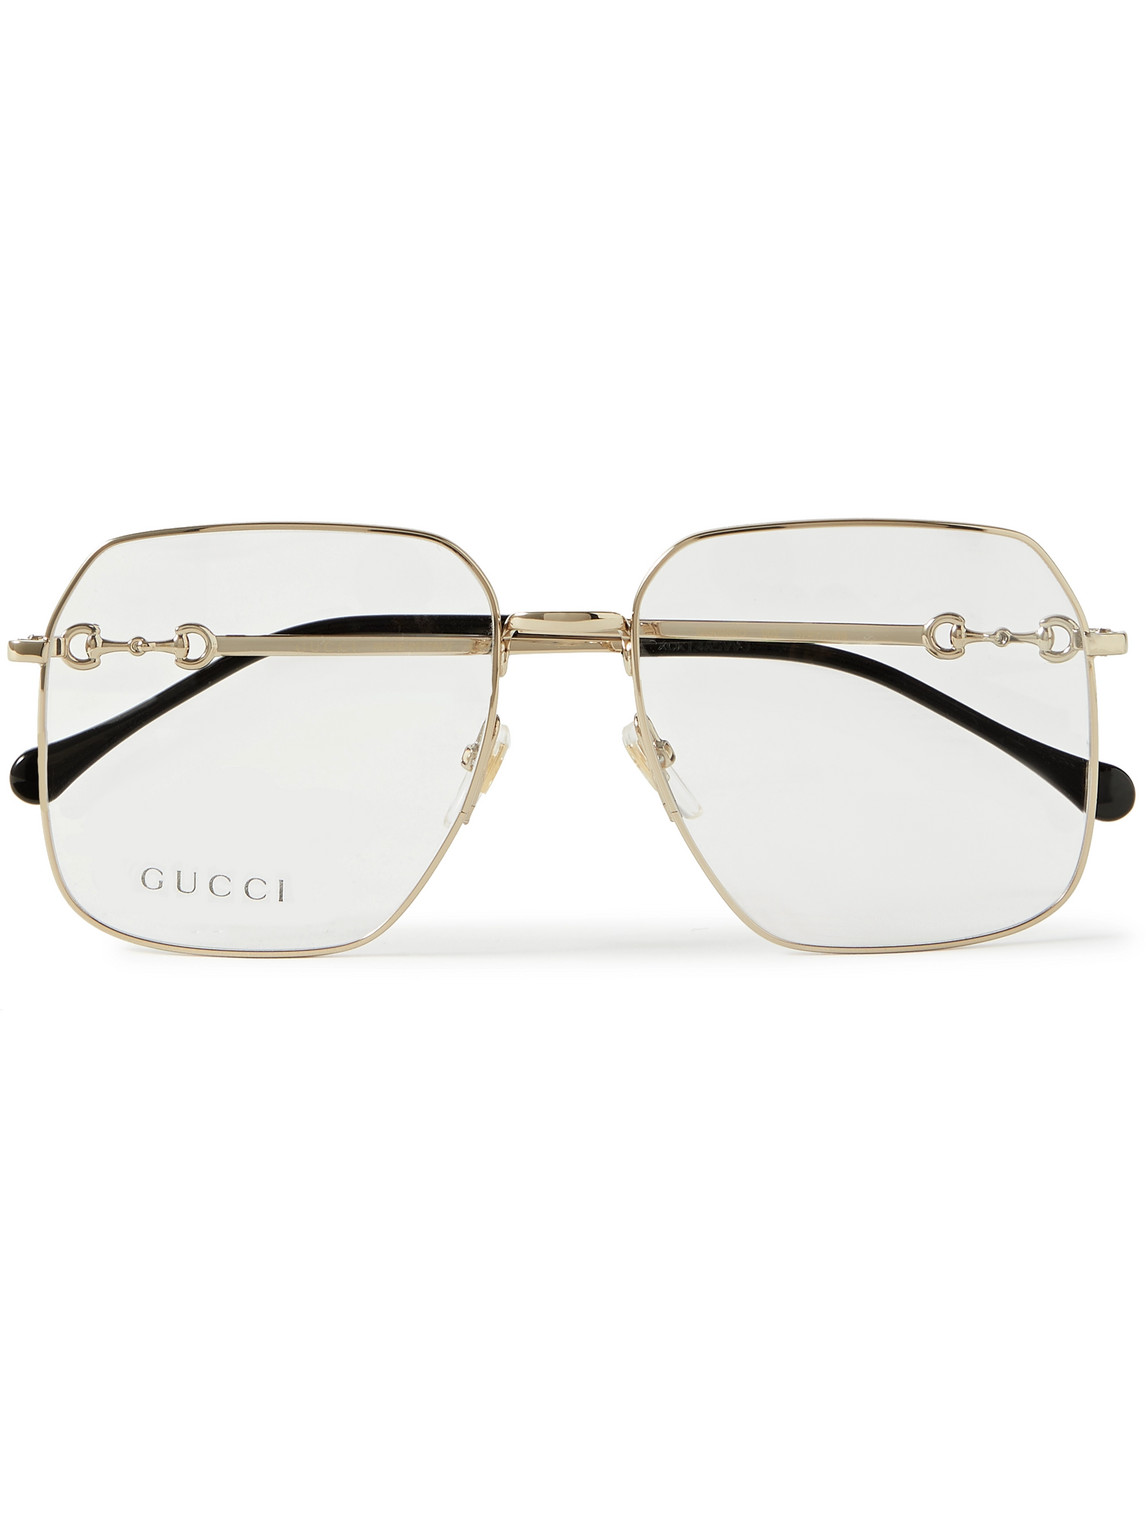 Gucci Square-frame Gold-tone Optical Glasses